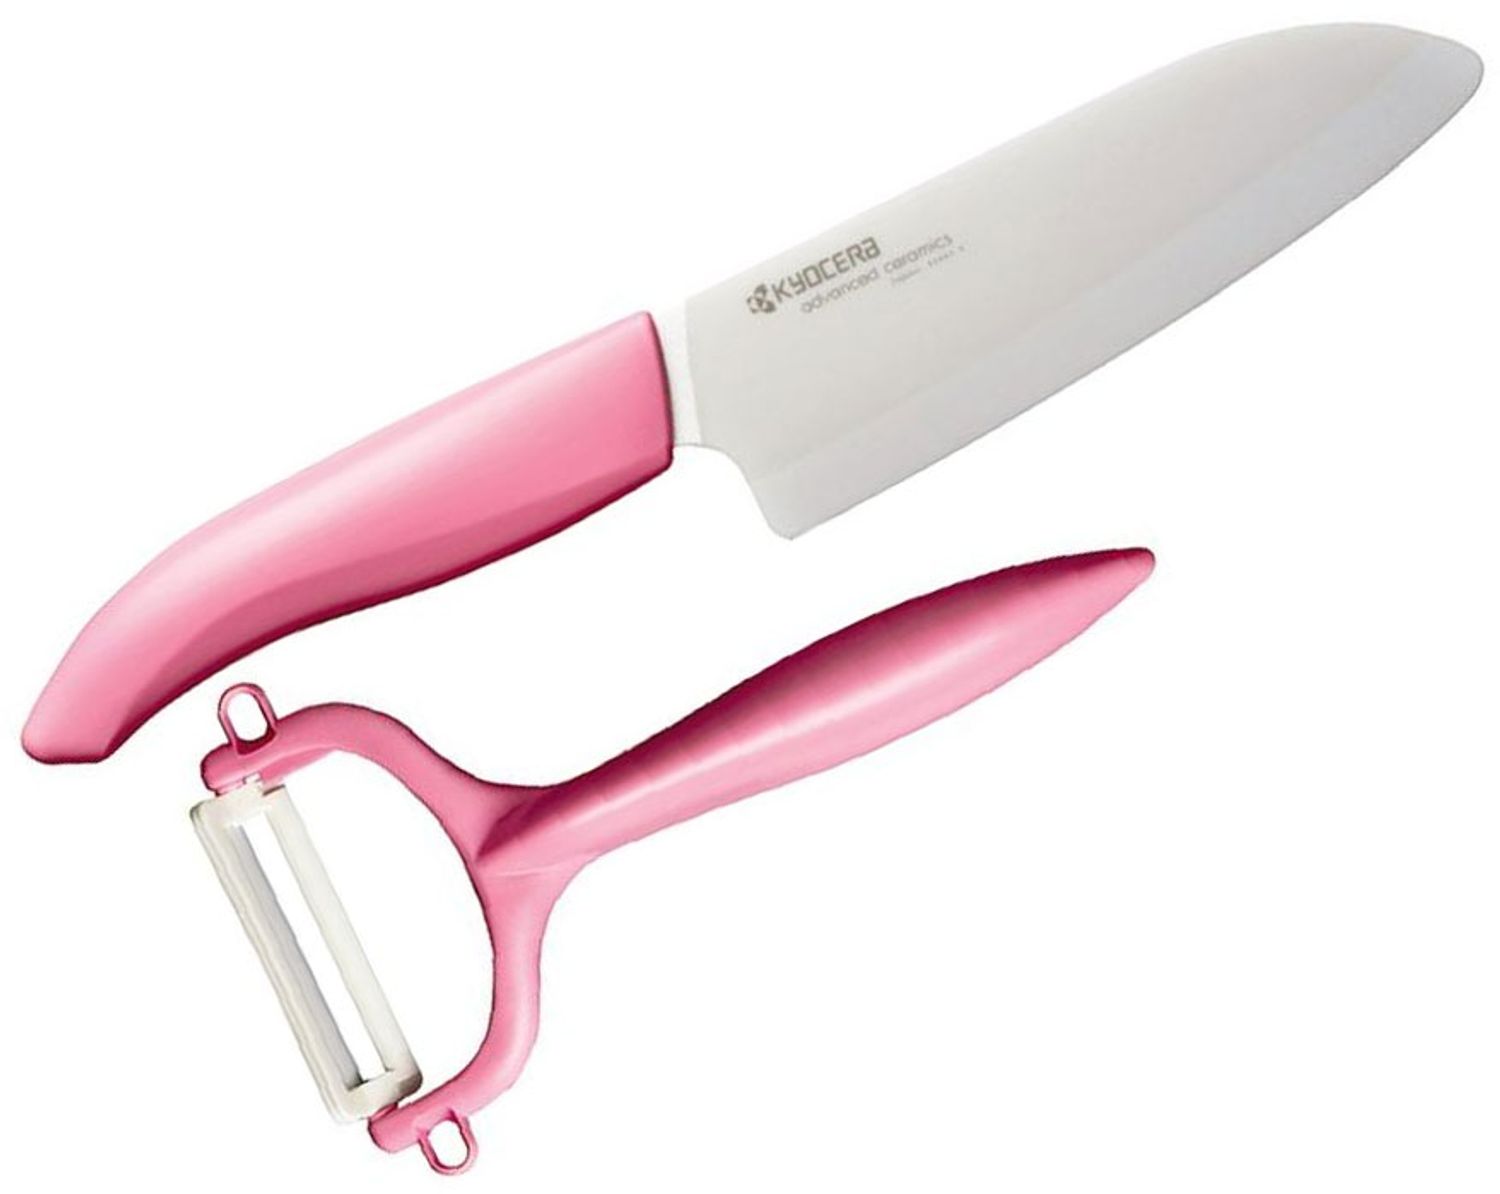 KYOCERA > The ultimate ultra-sharp, lightweight, ergonomic 3 piece knife set